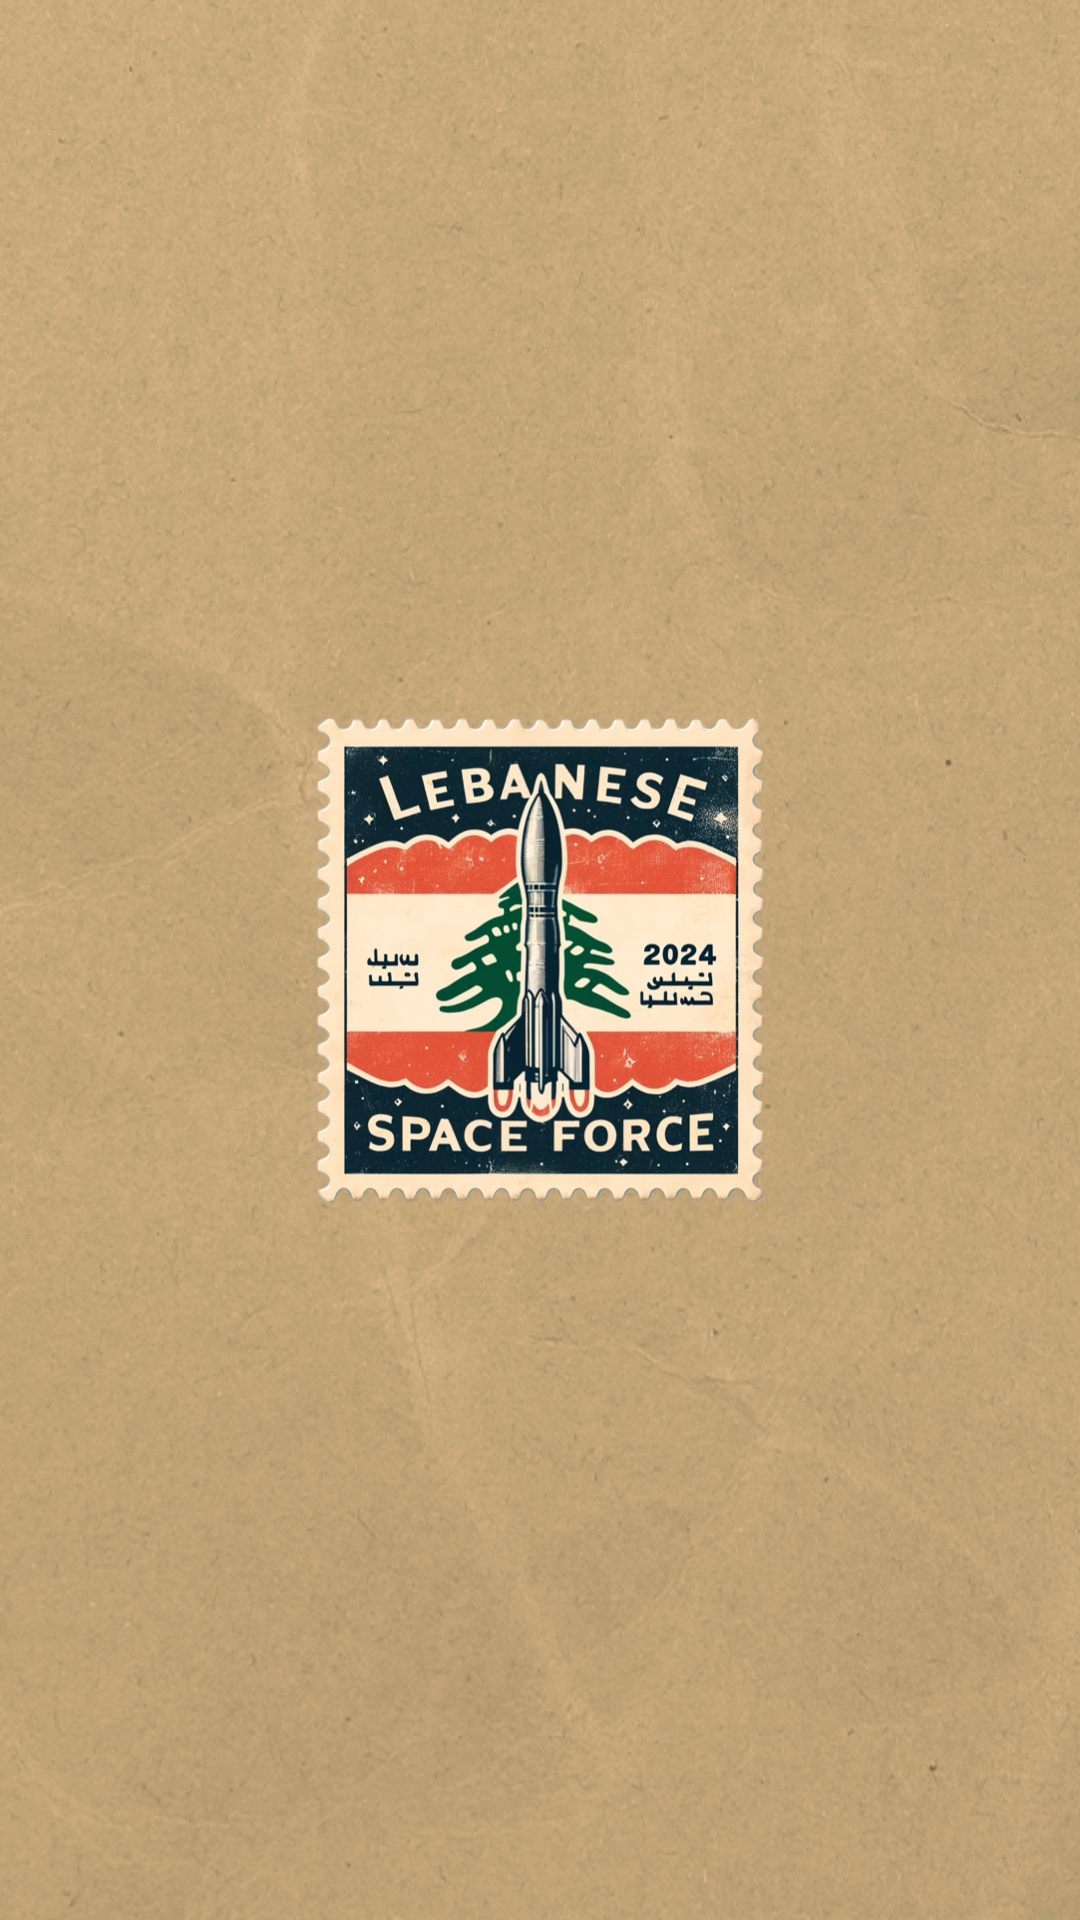 Lebanese space force